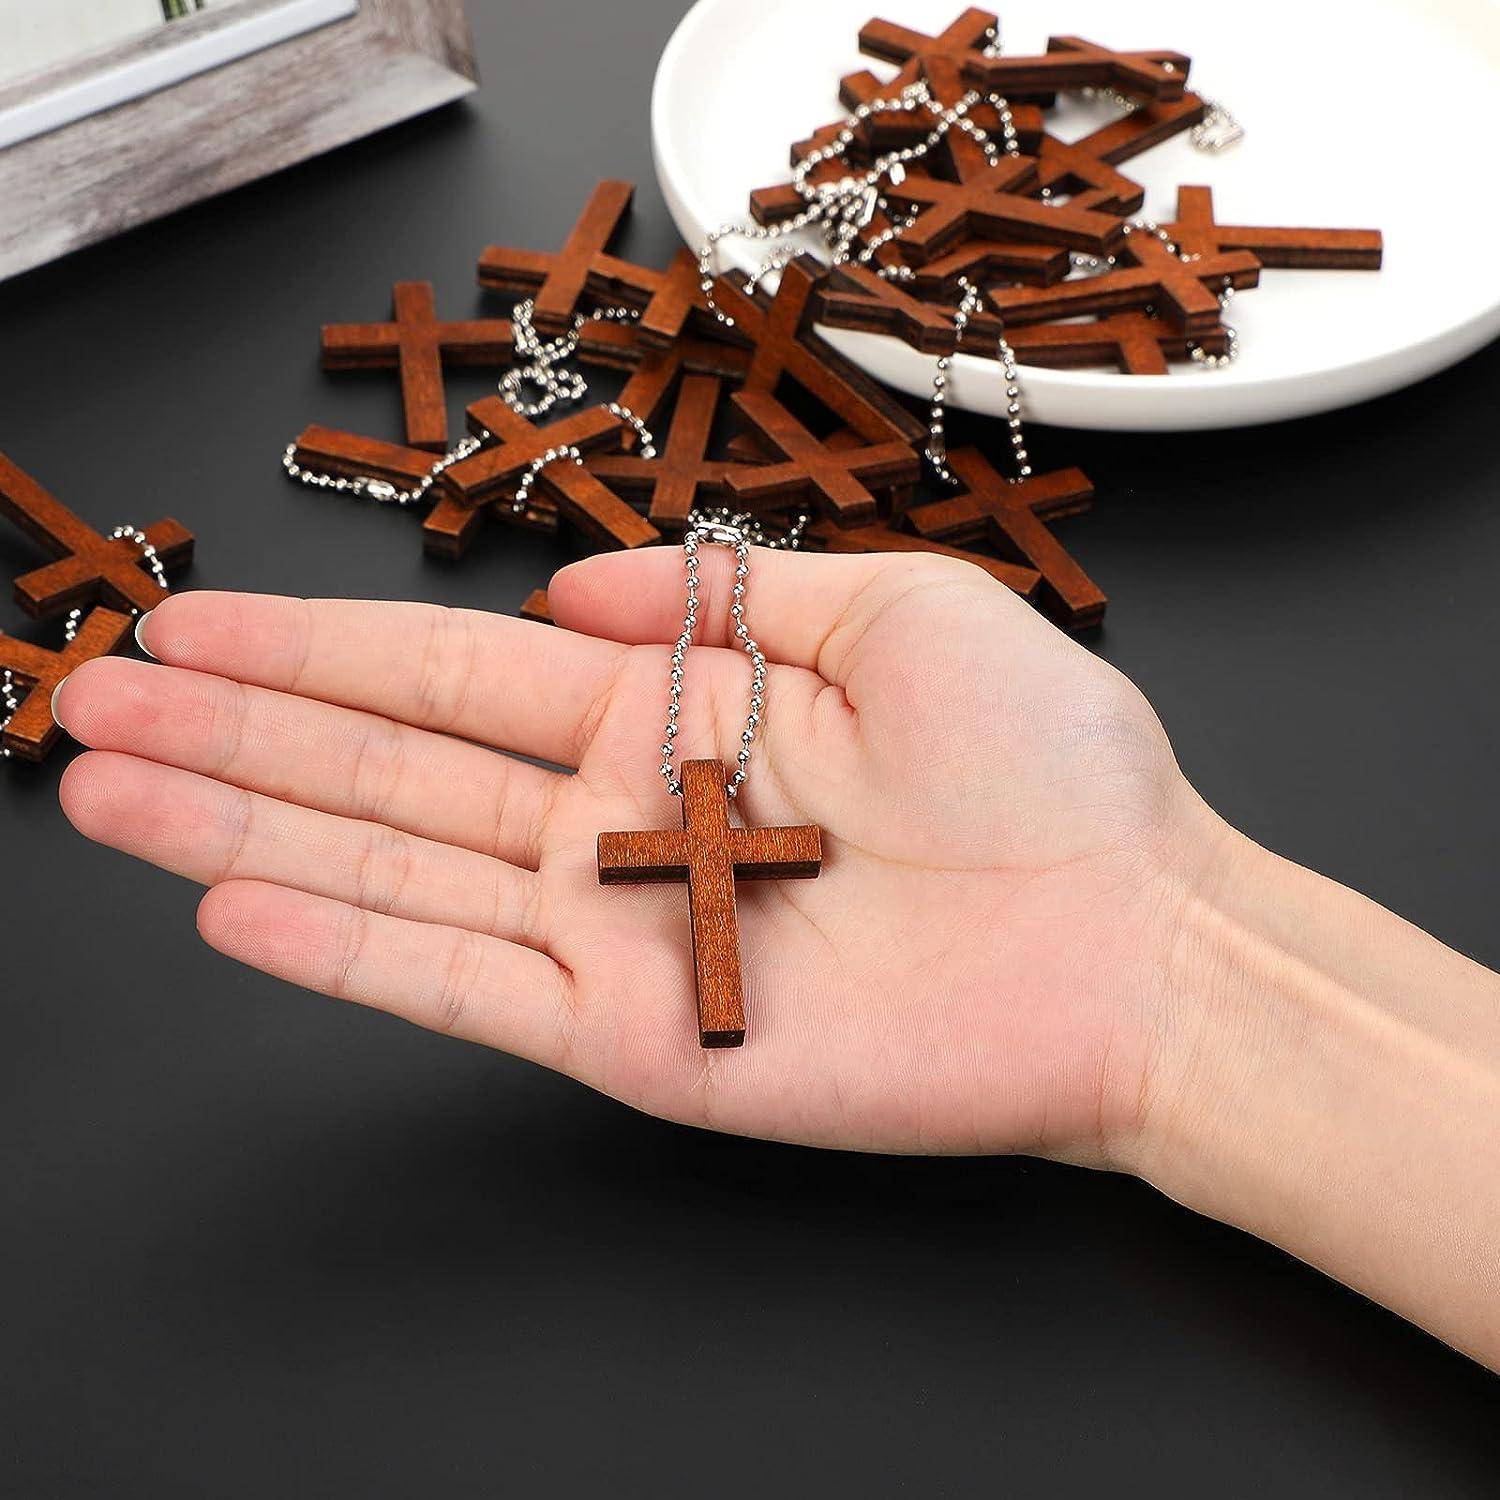 Wooden Cross Necklace/wooden Cross Pendant for Men or Women